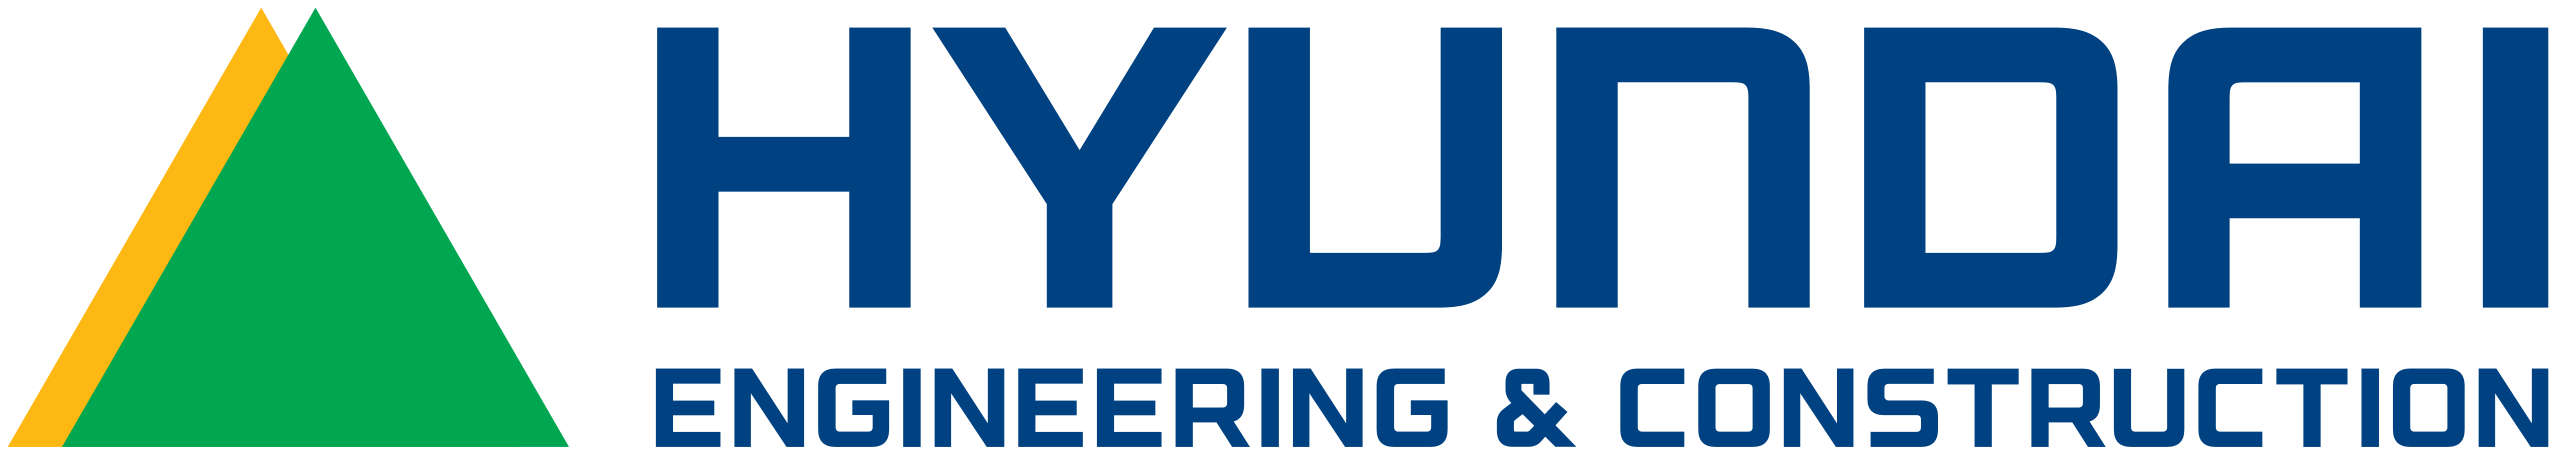 File:Hyundai Engineering & Construction logo.svg - Wikipedia